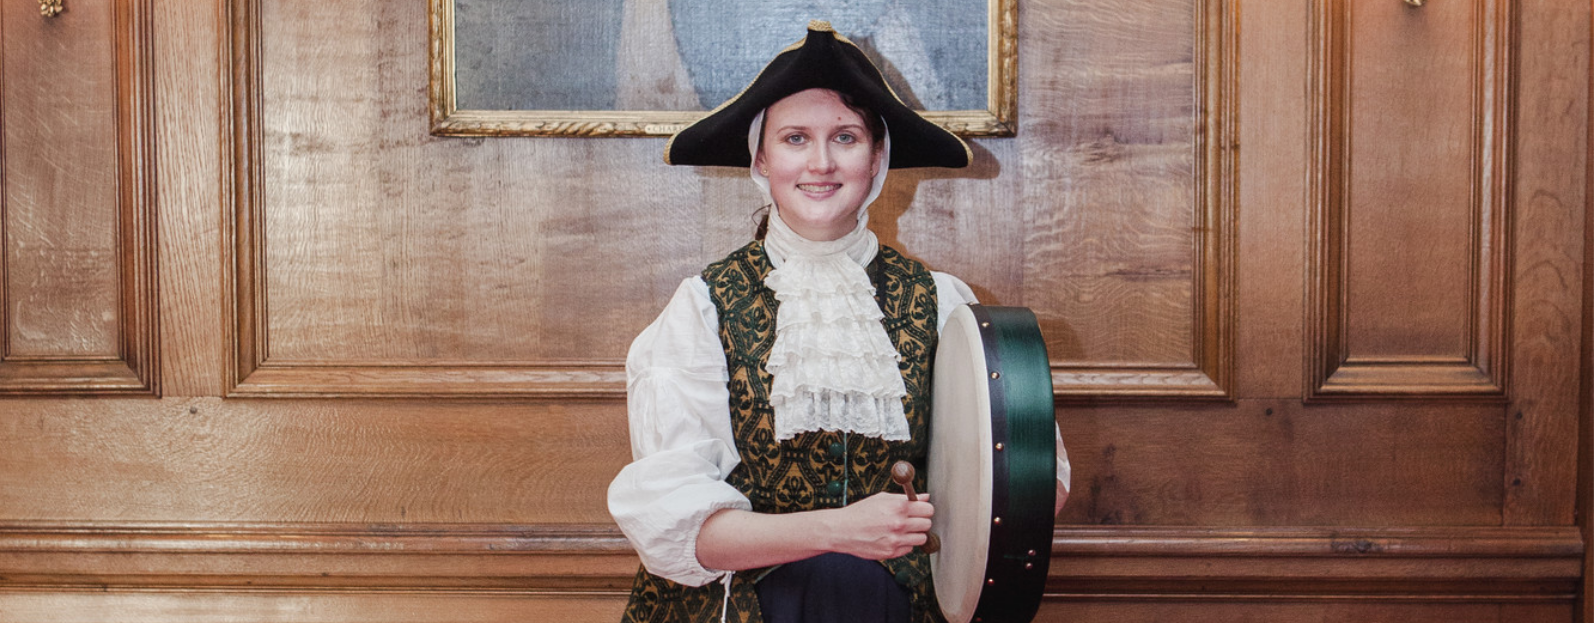 Musician in 18th Century costume